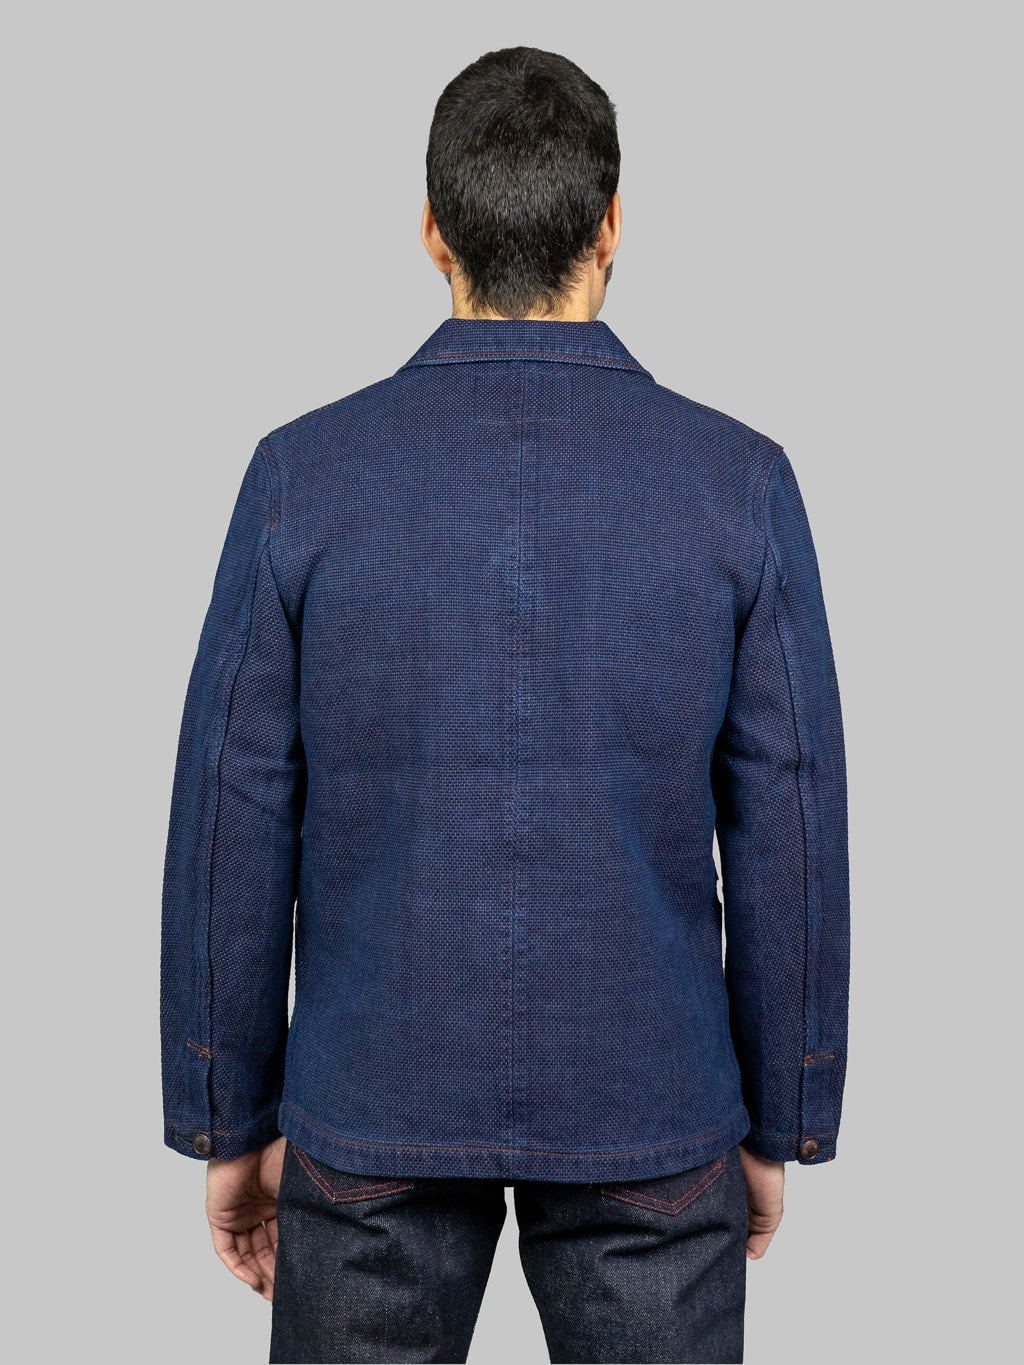 Studio Dartisan indigo kakishibu sashiko selvedge jacket back fit